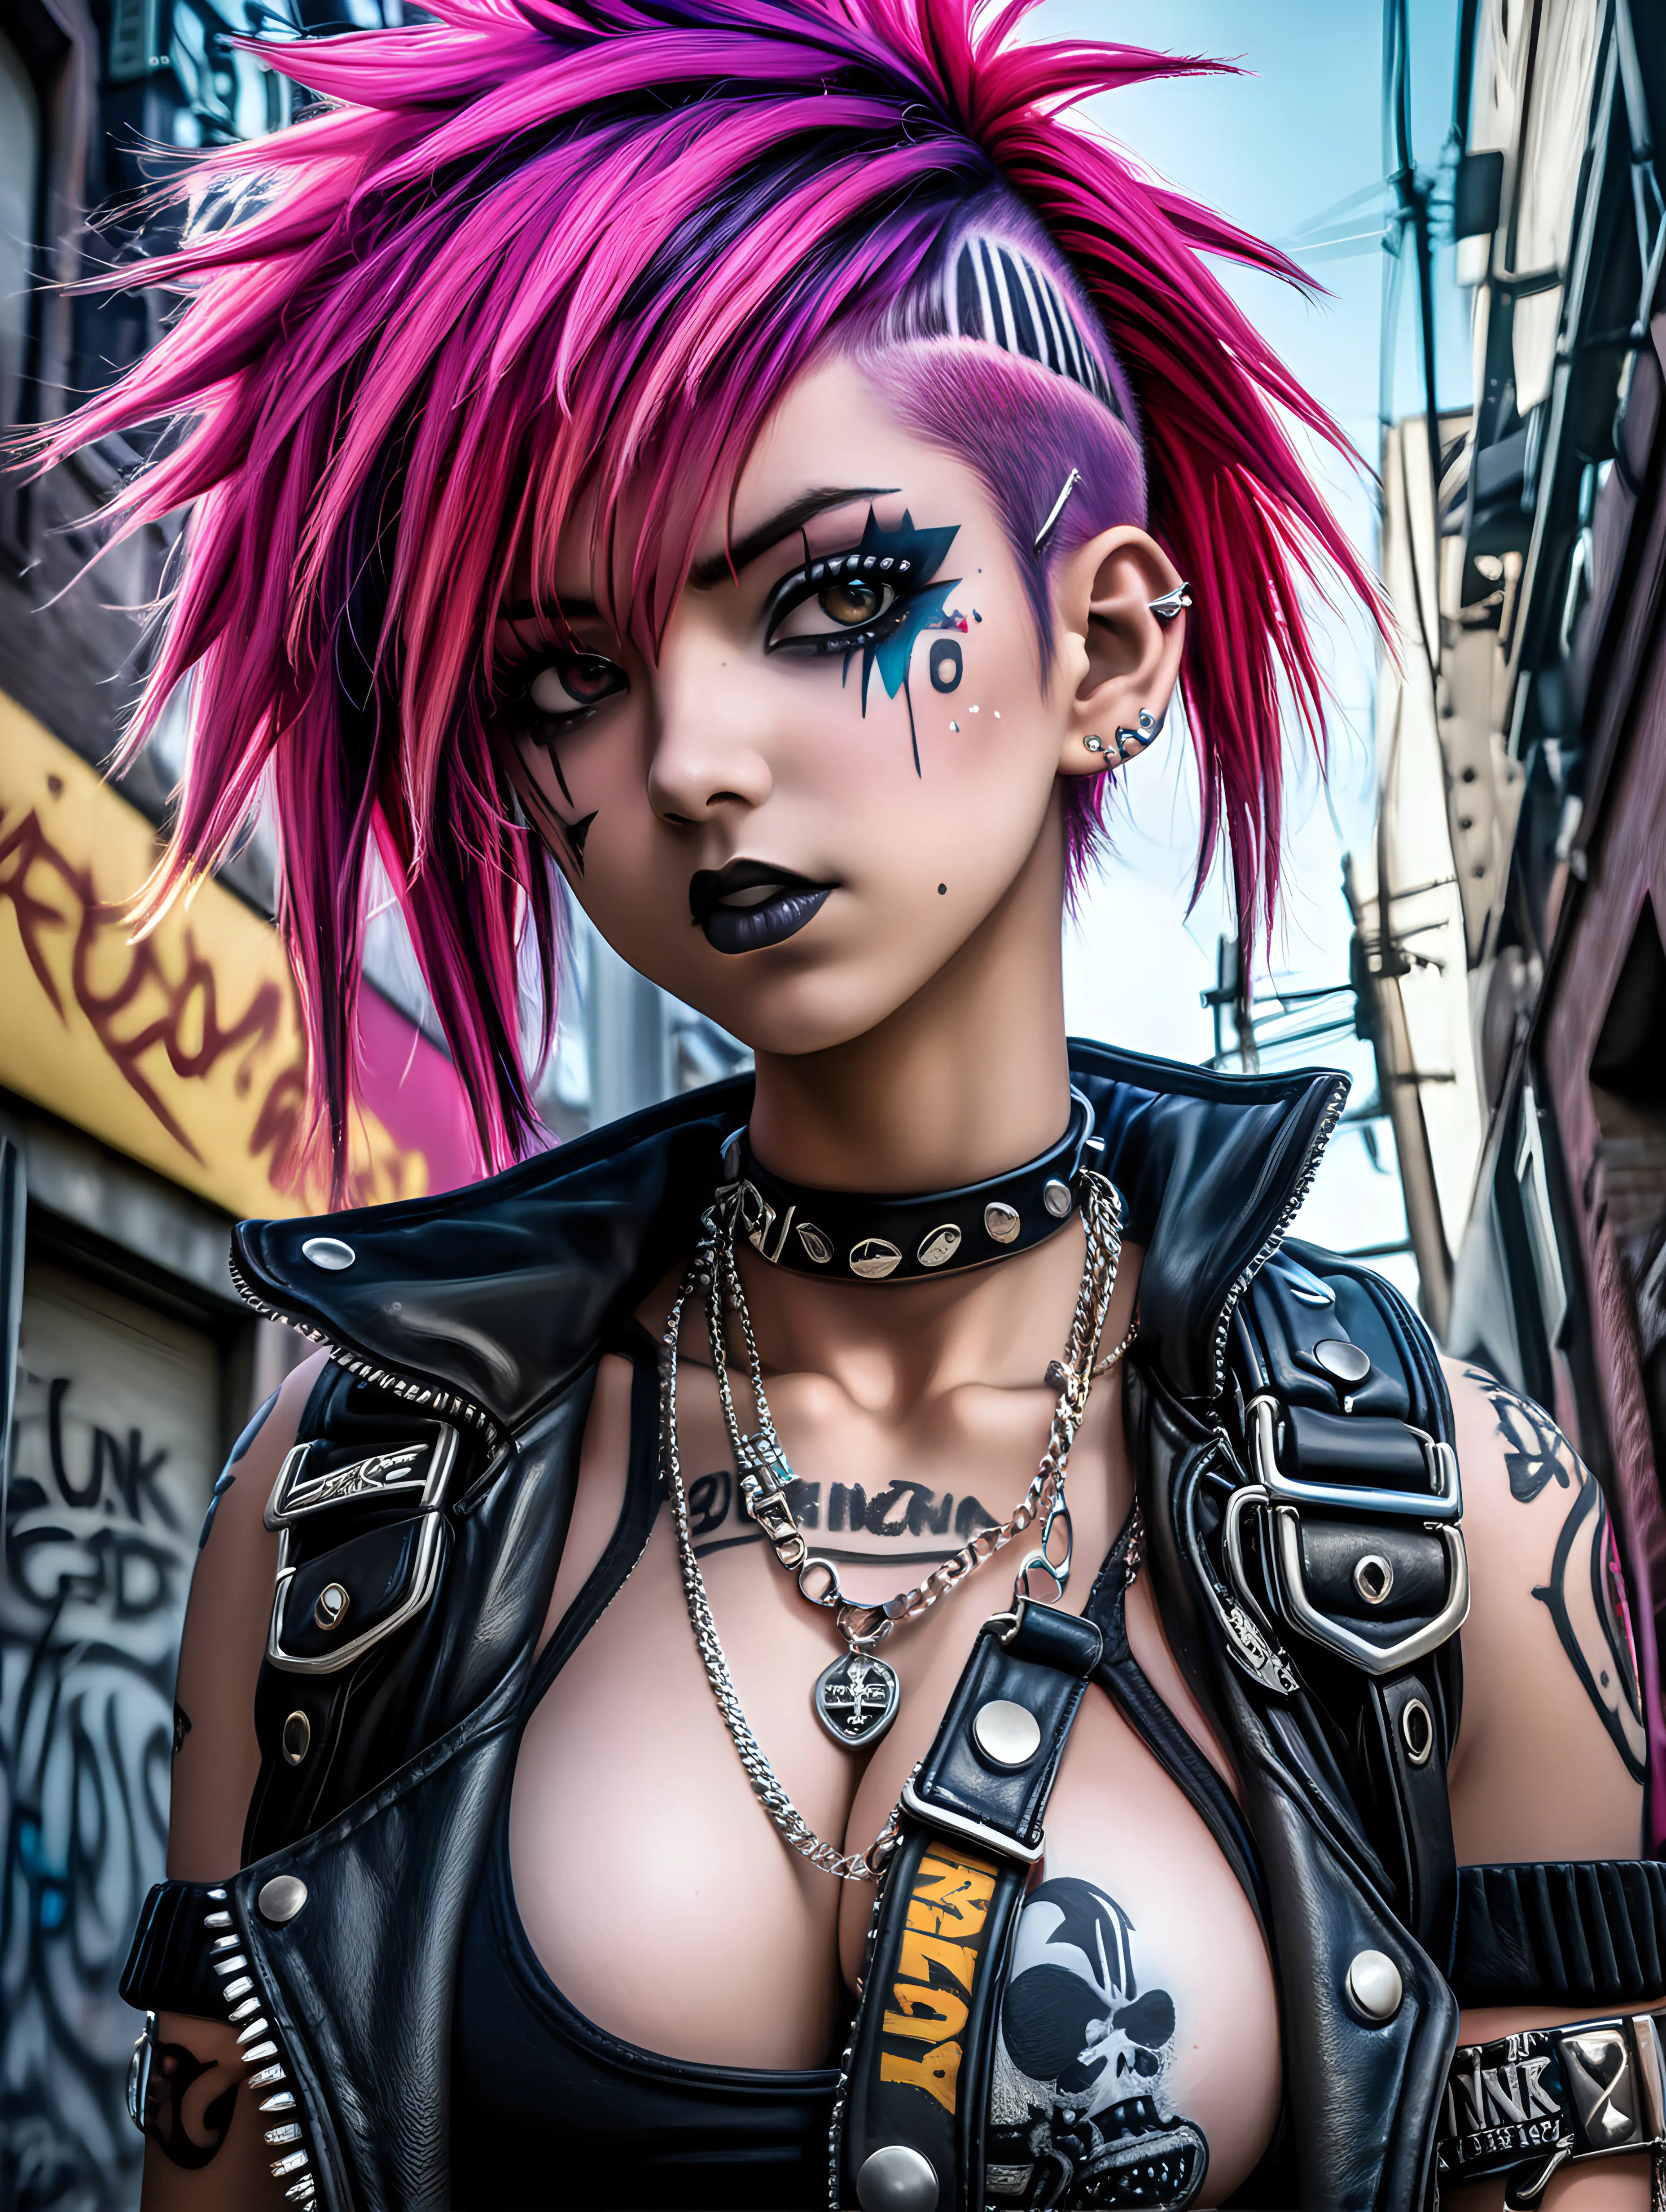 Rebellious Anime Punk Girl Vibrant Nonconformity in Gritty Urban Cinematics